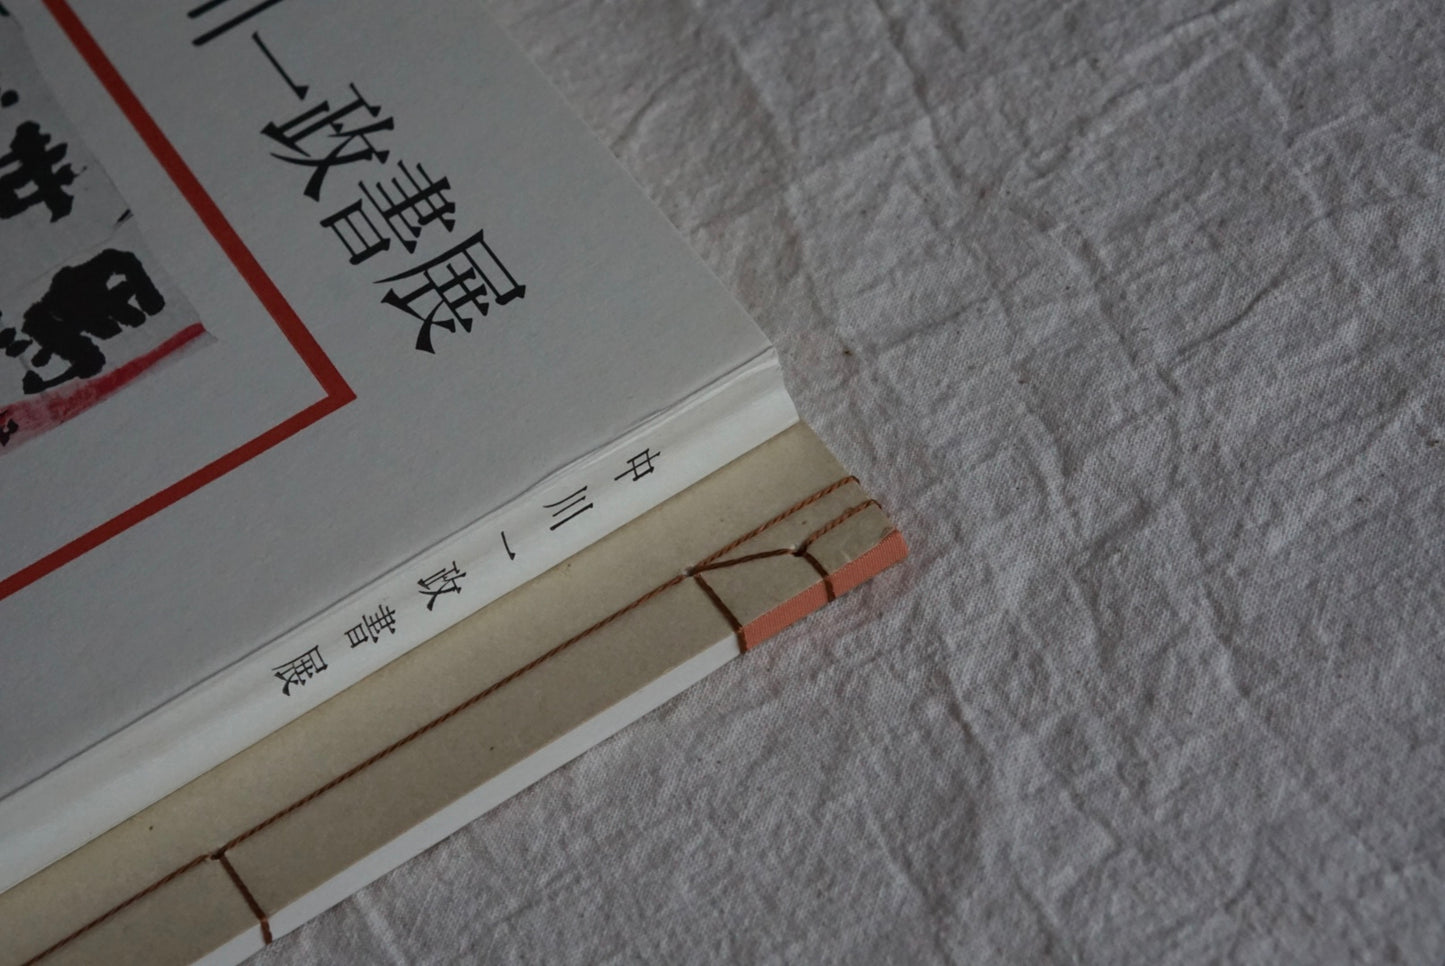 Nakagawa Kazumasa Calligraphy Exhibition Catalogue and Seal Collection Complete set of 2 volumes Yoshii Gallery 10th Anniversary